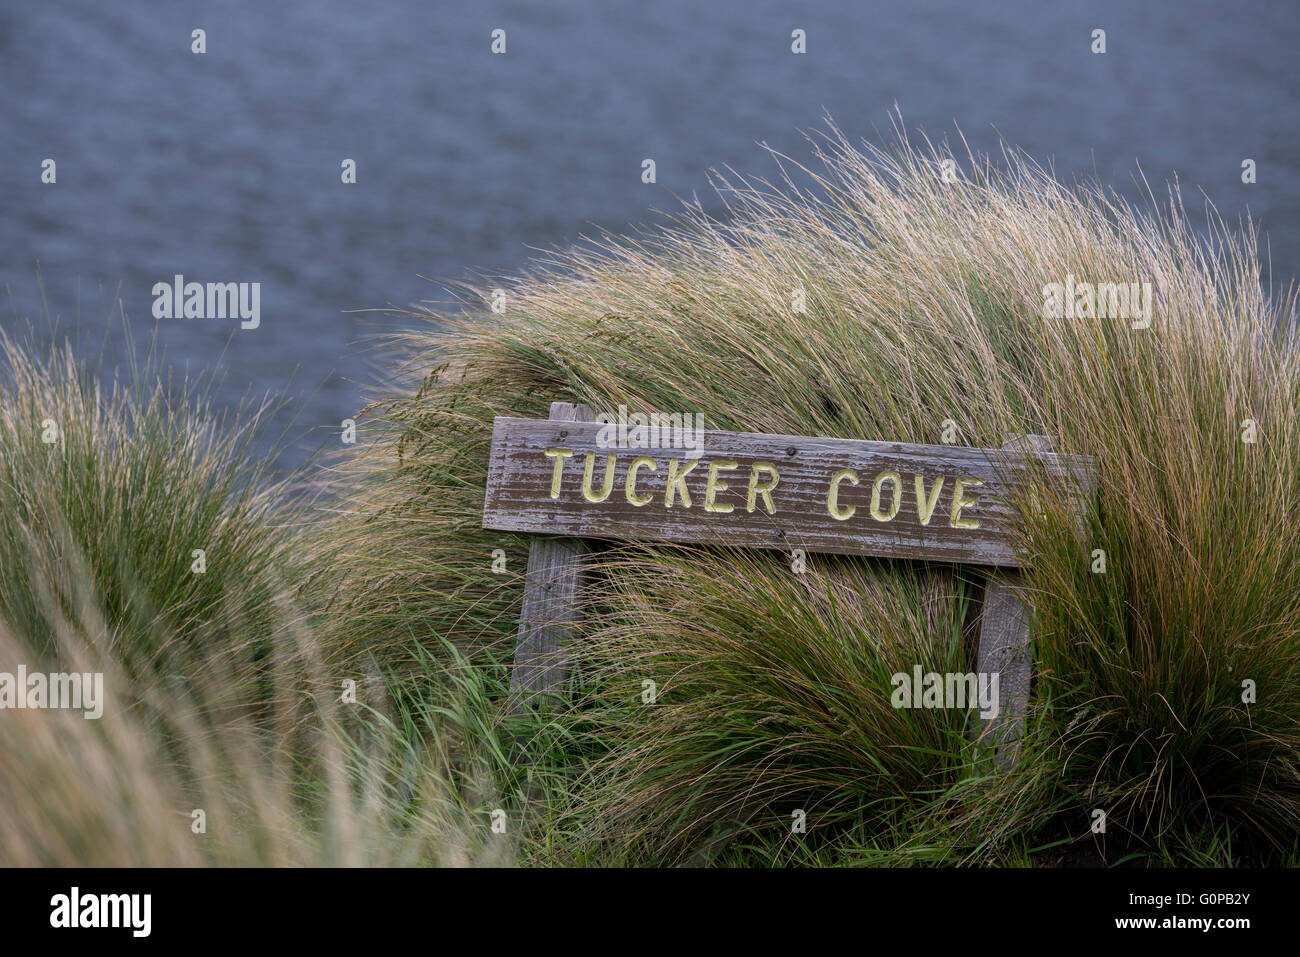 New Zealand, Campbell Island aka Moto Ihupuku, a subantarctic island. Tucker Cove sign in tall tussac grass. Stock Photo